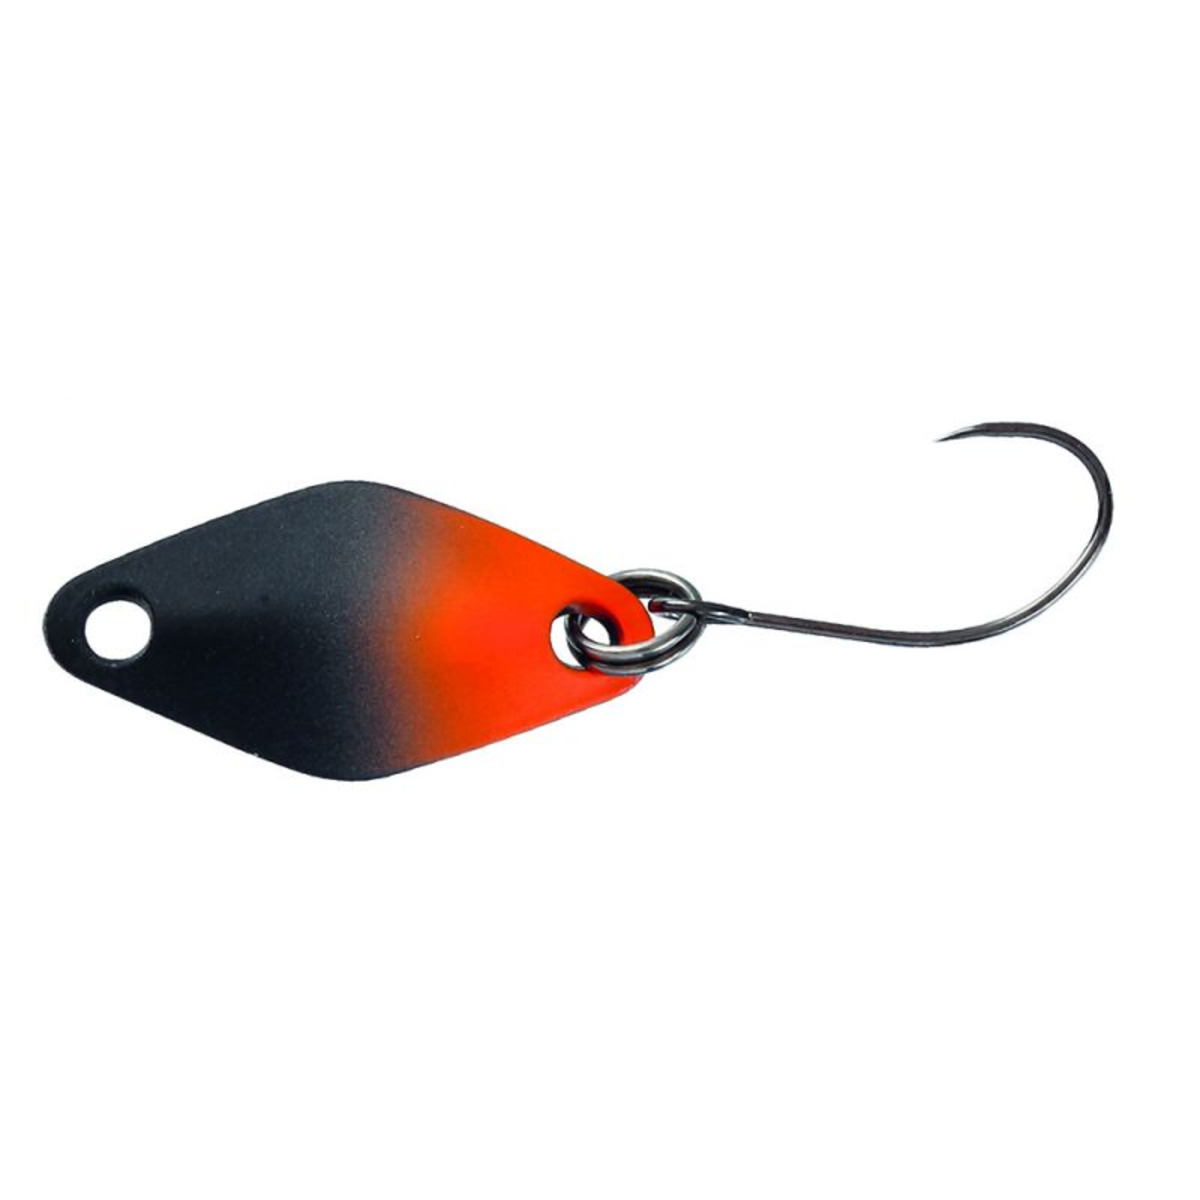 Herakles Kite Spoon - 1.2 g - Black Orange